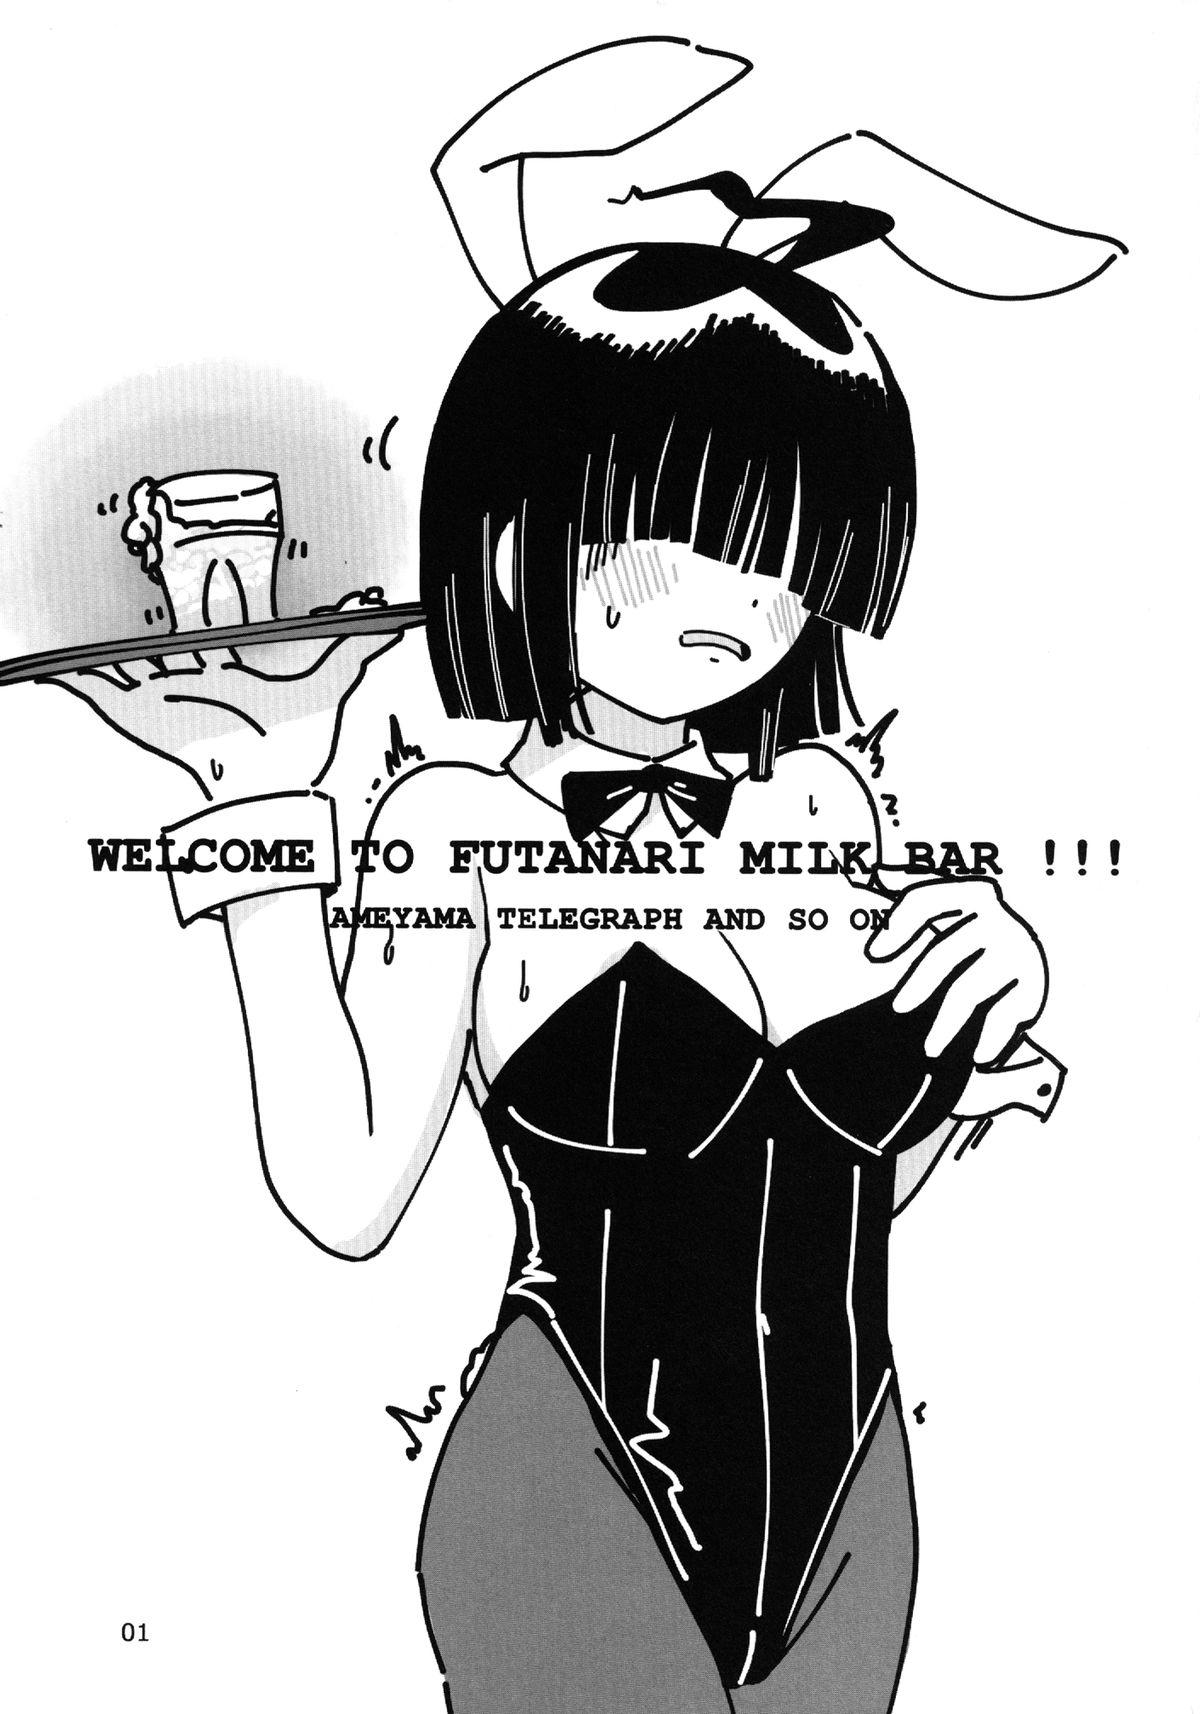 WELCOME TO FUTANARI MILK BAR!!! 2